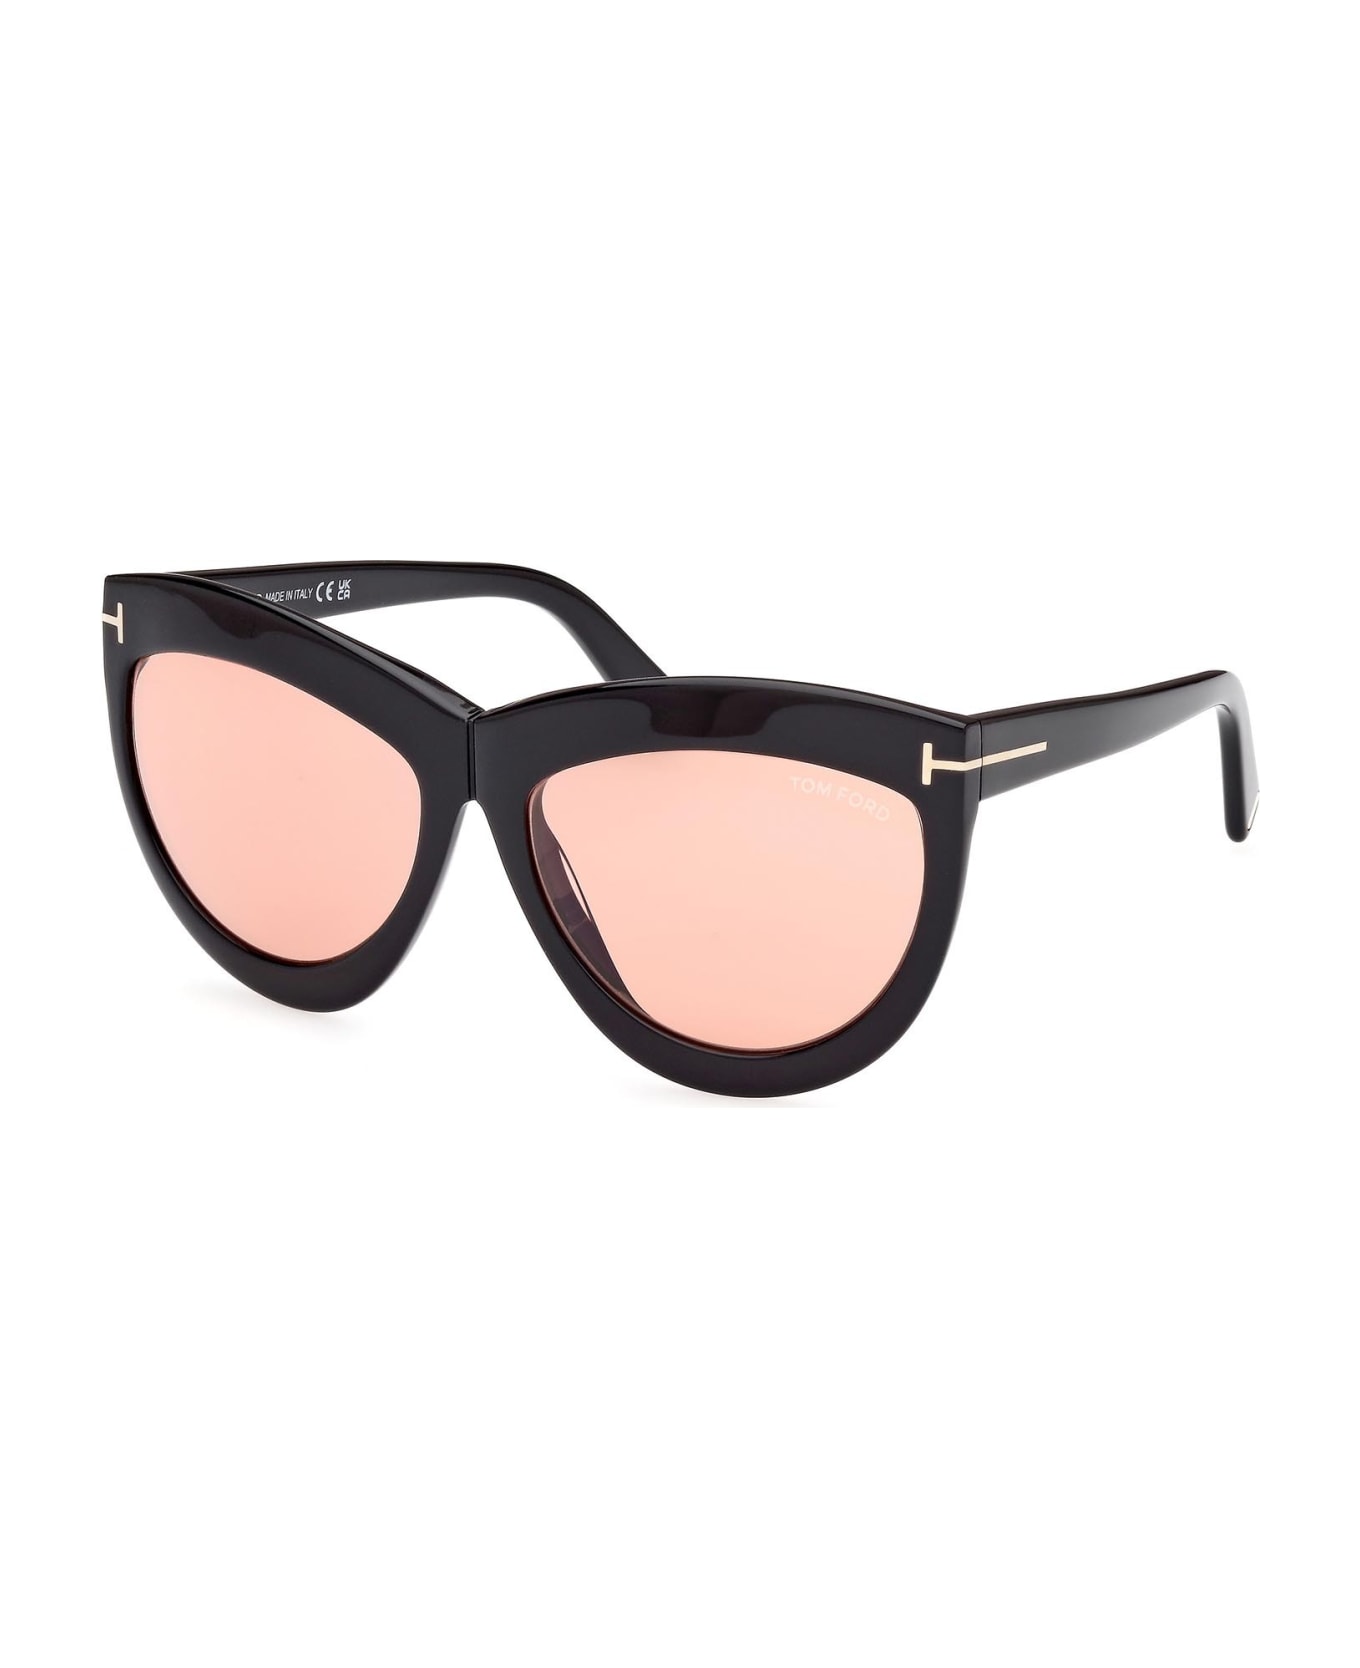 Tom Ford Eyewear Sunglasses